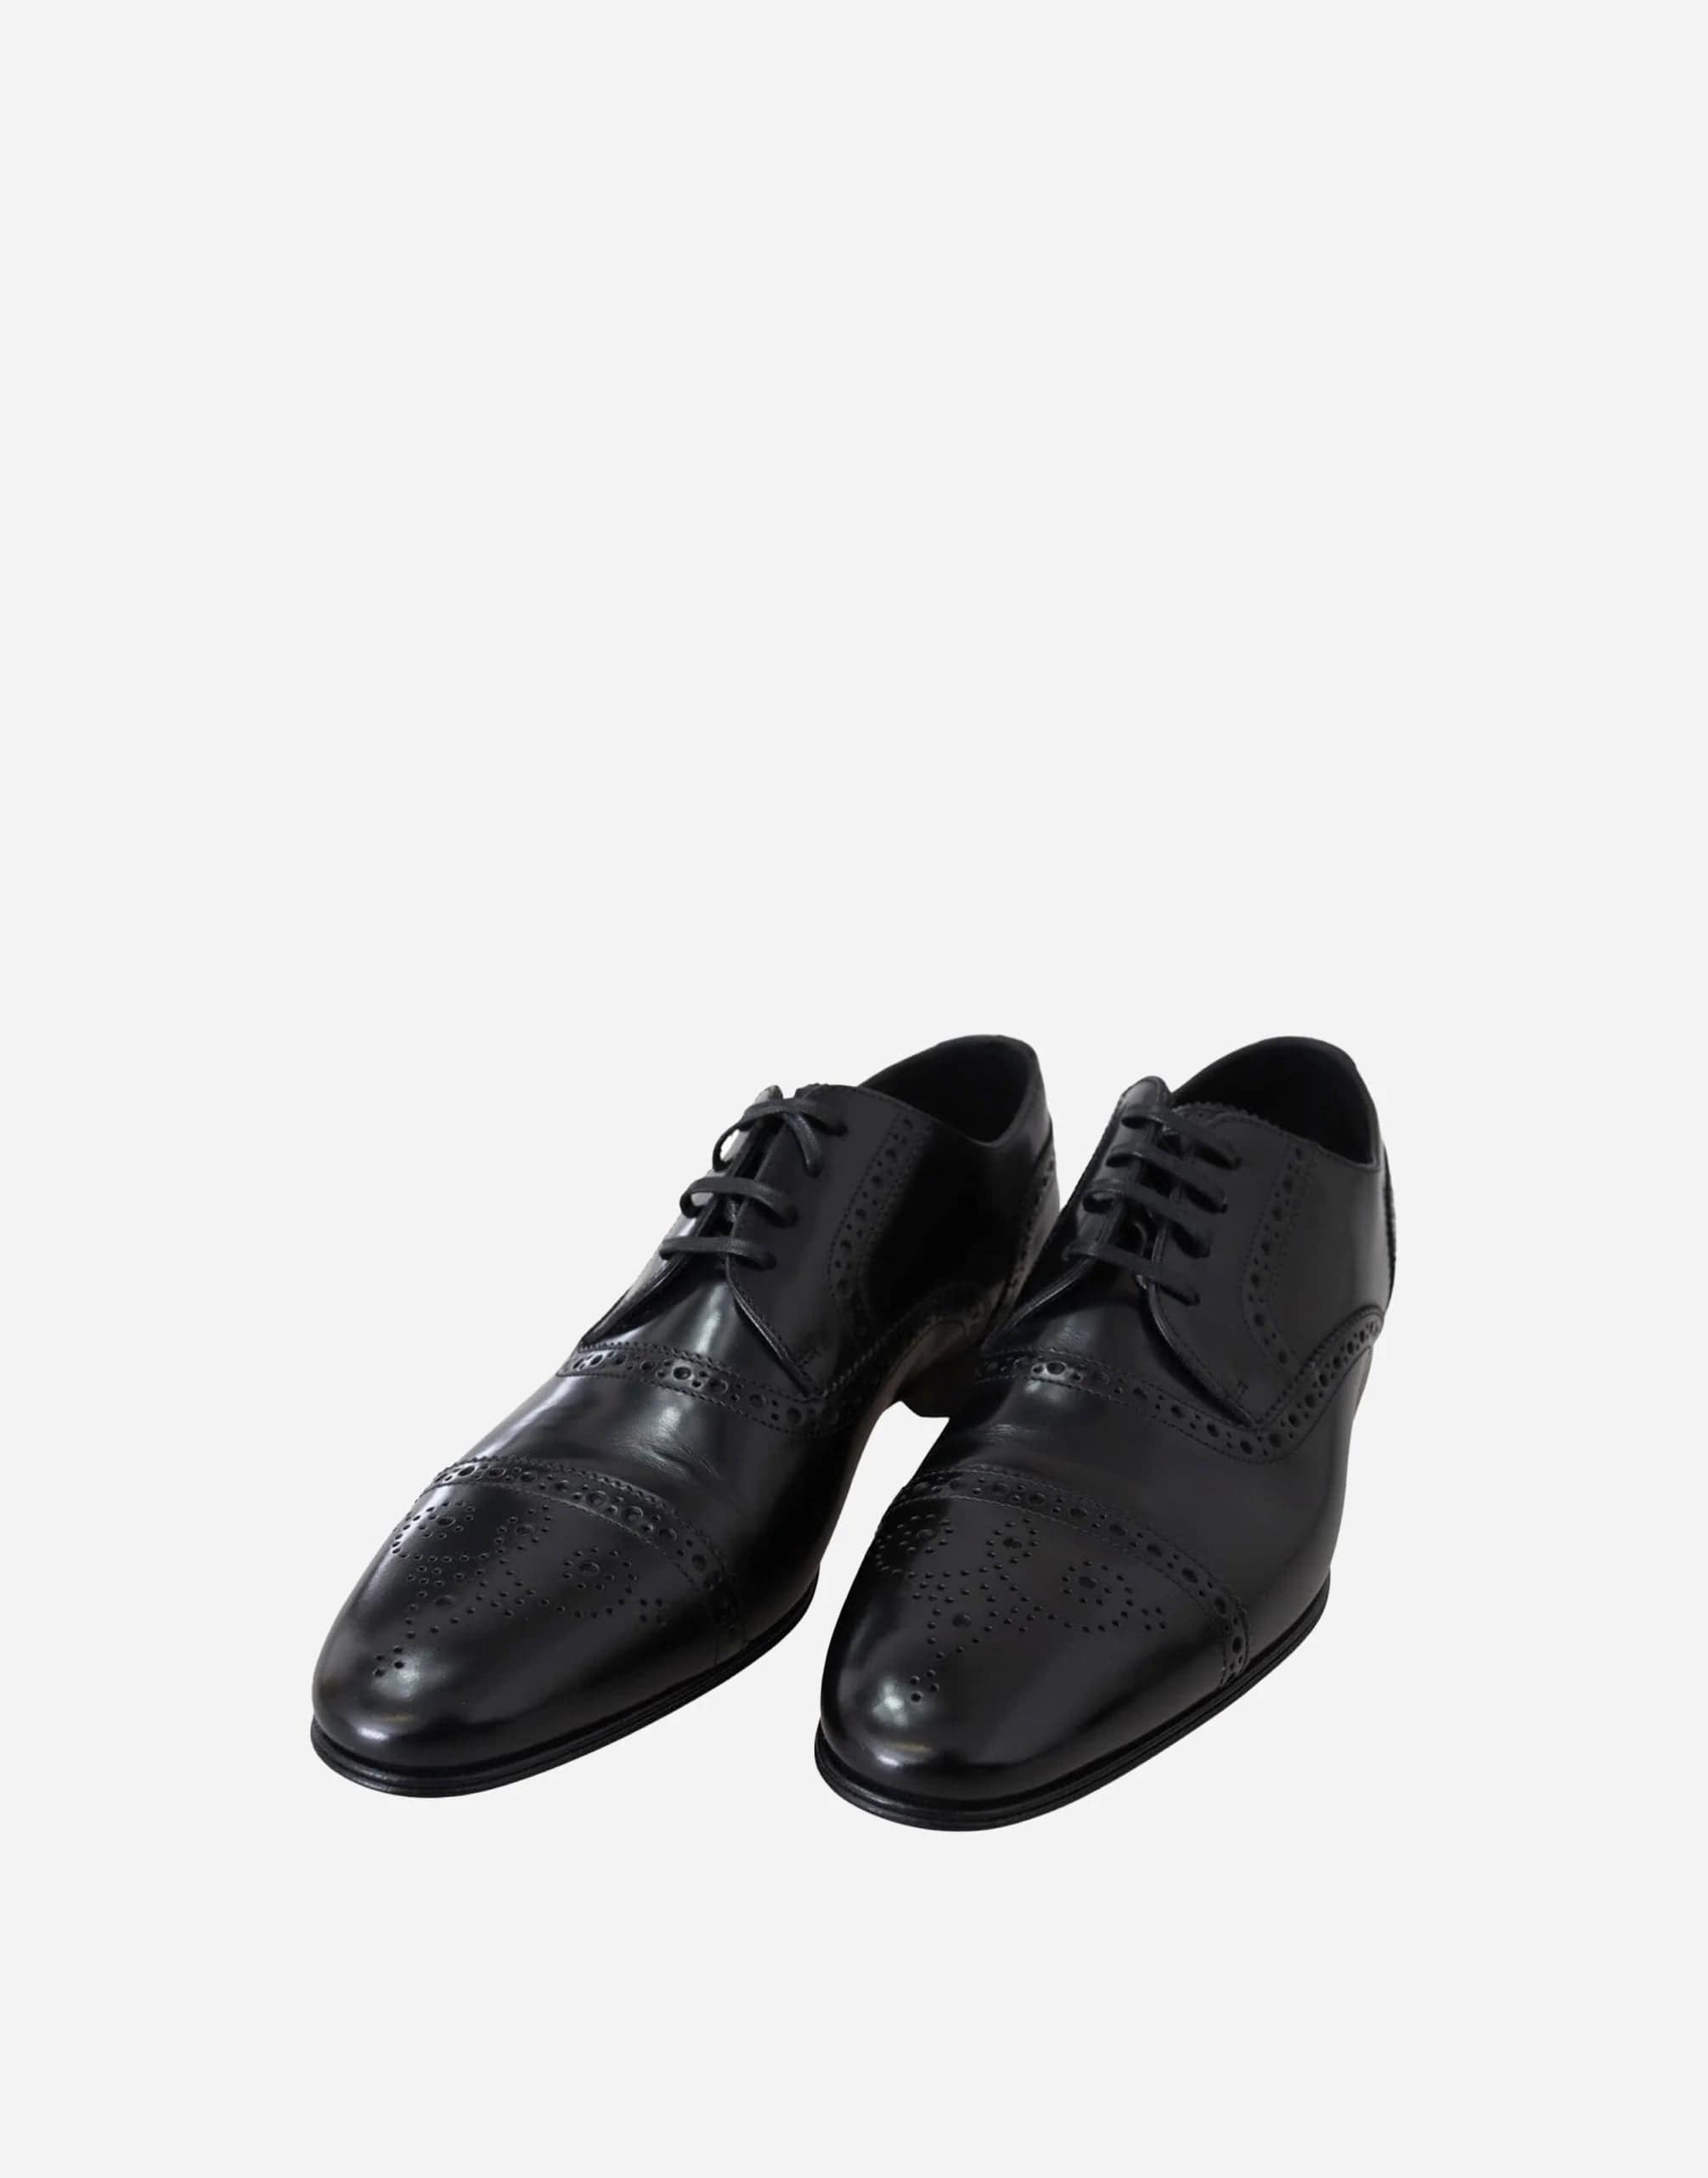 Dolce & Gabbana Wingtip Oxford Derby Shoes